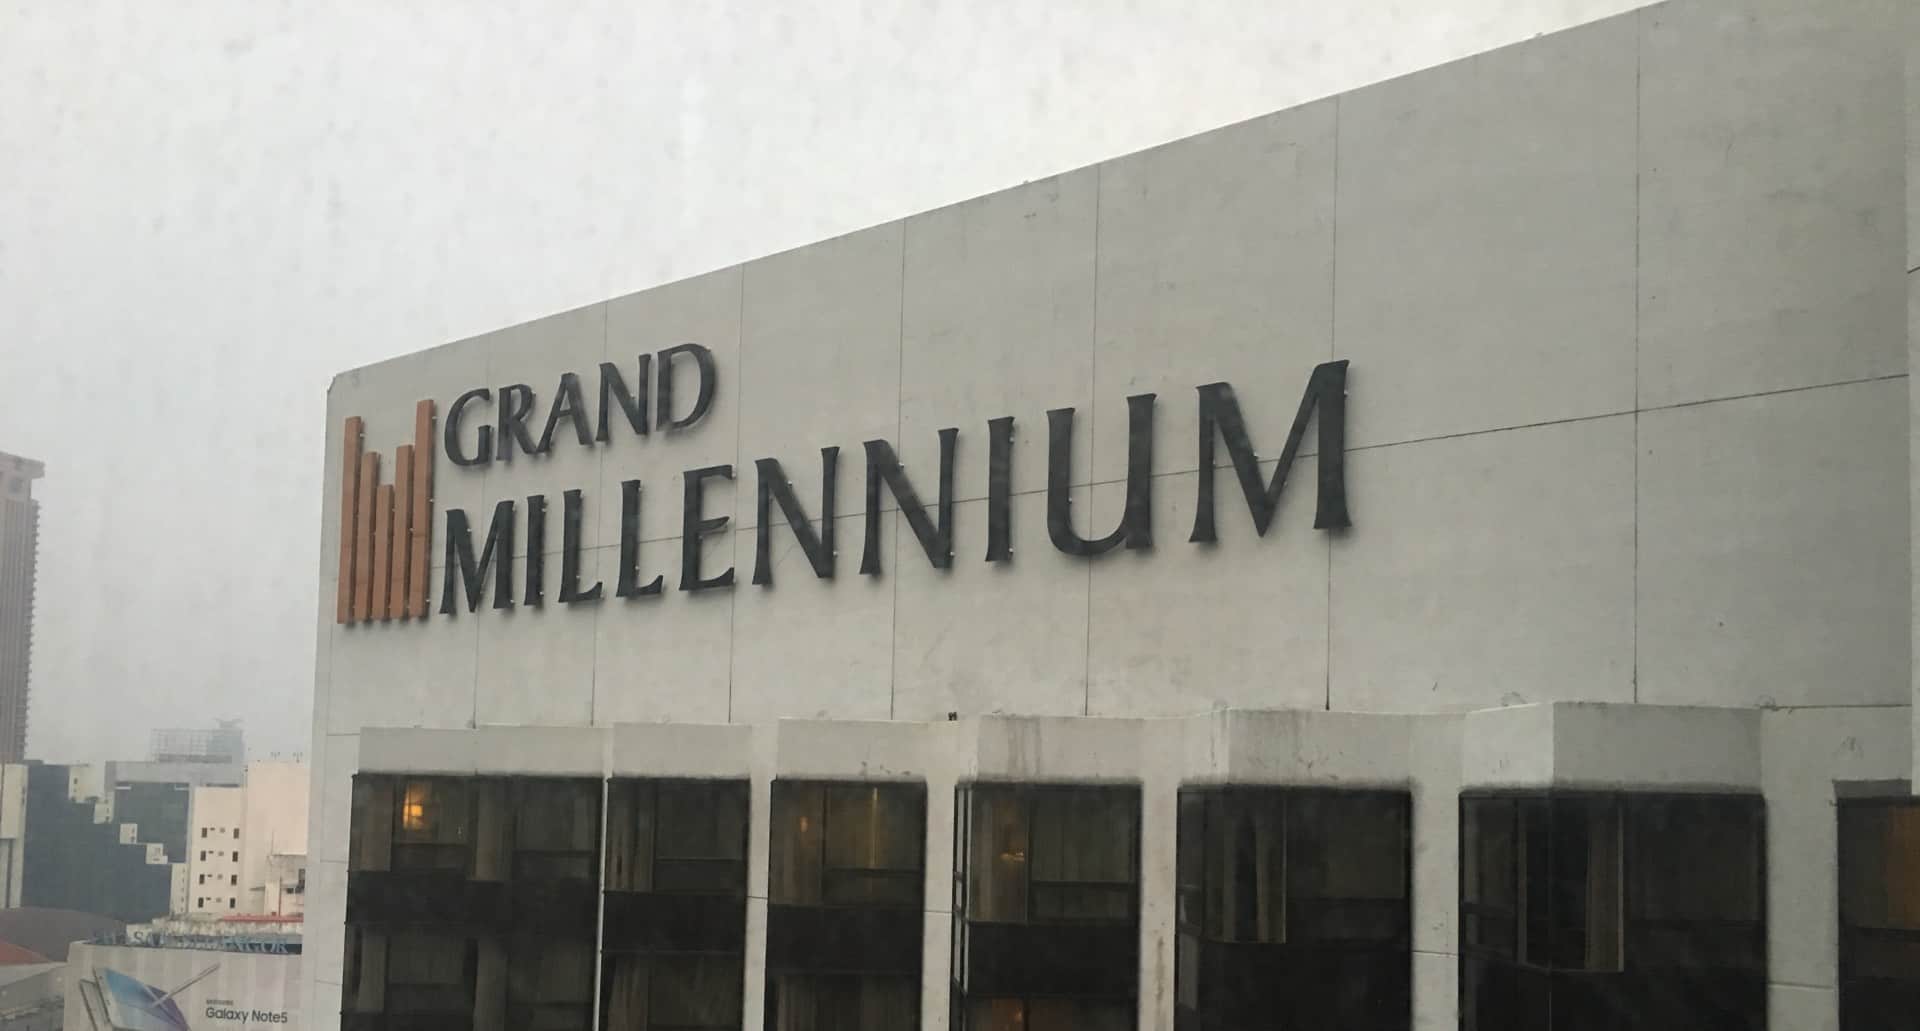 Grand Millennium Kuala Lumpur